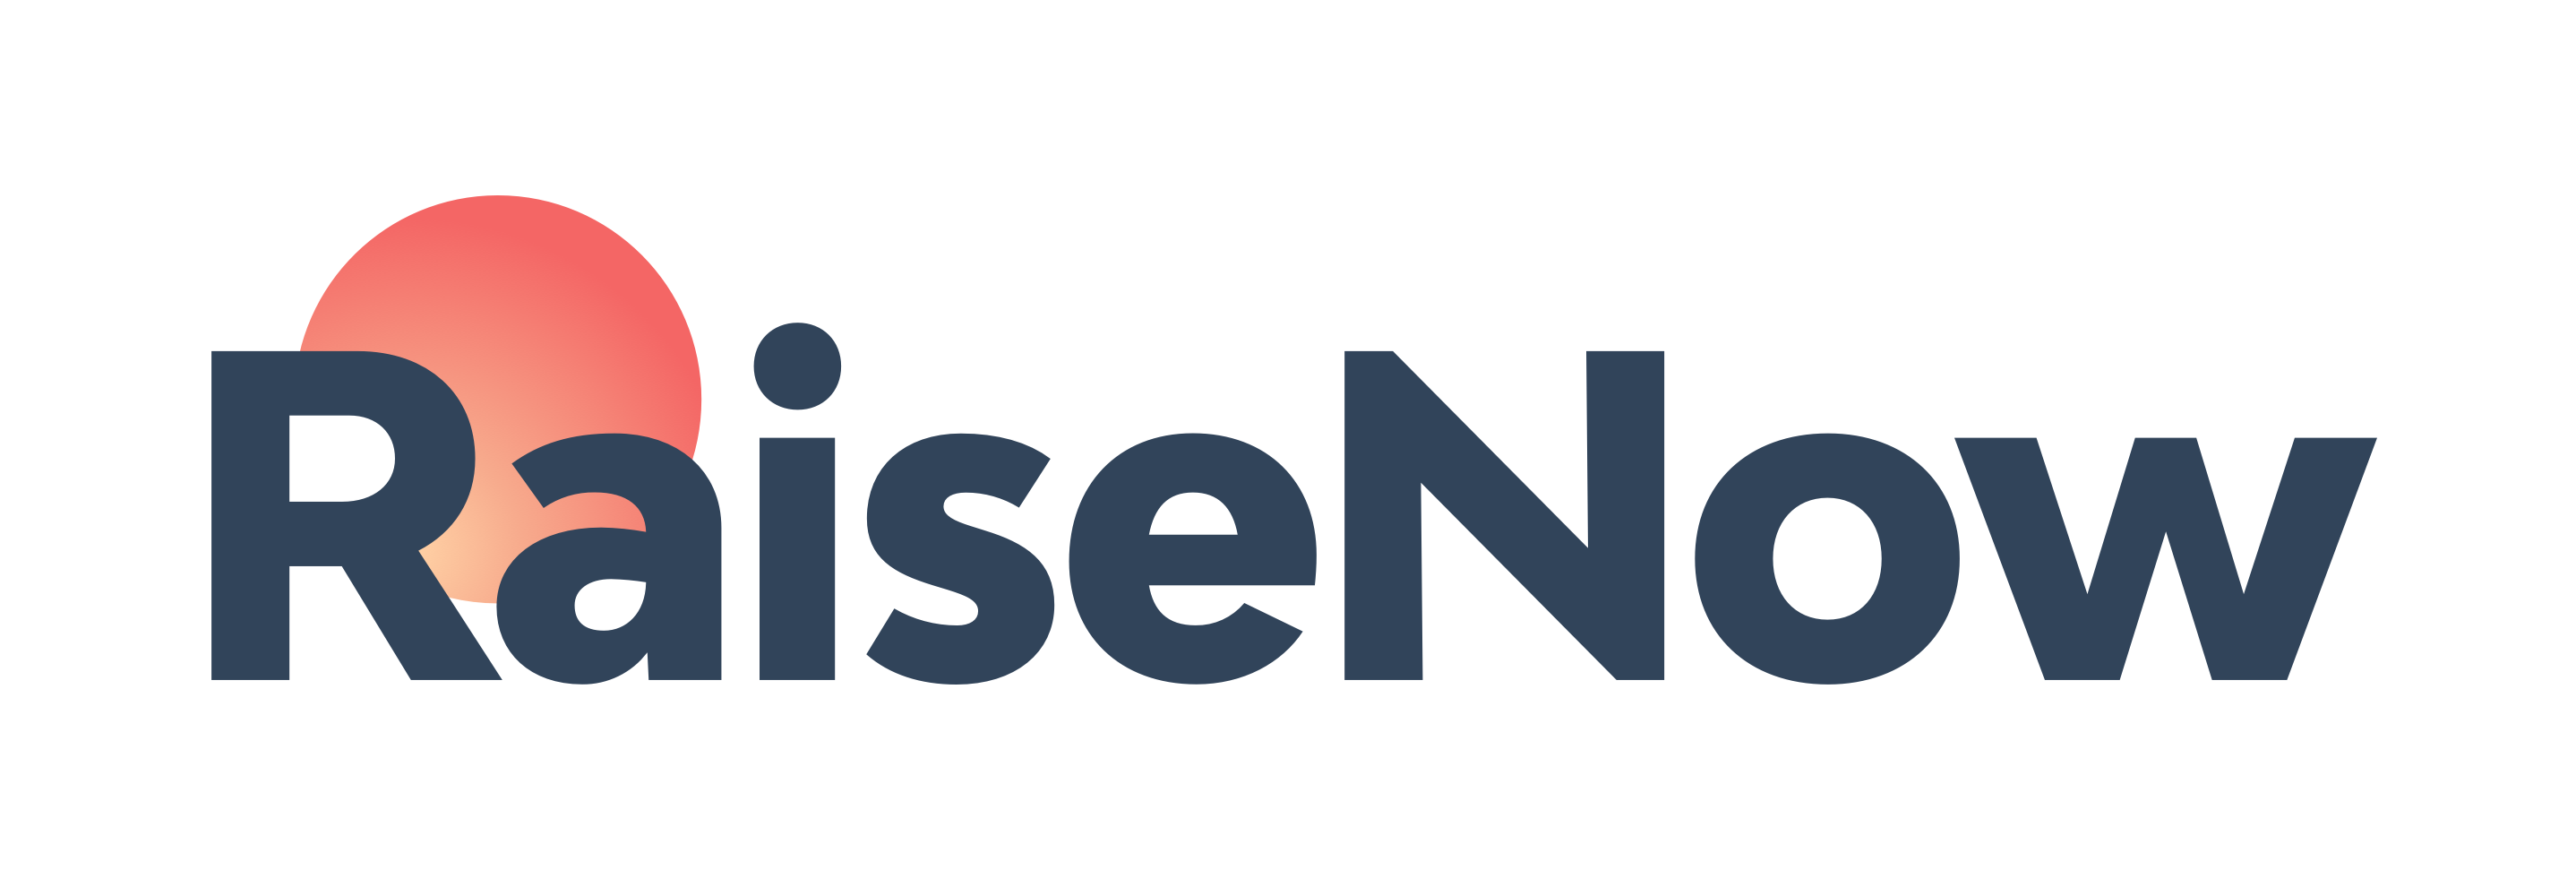 RaiseNow Logo